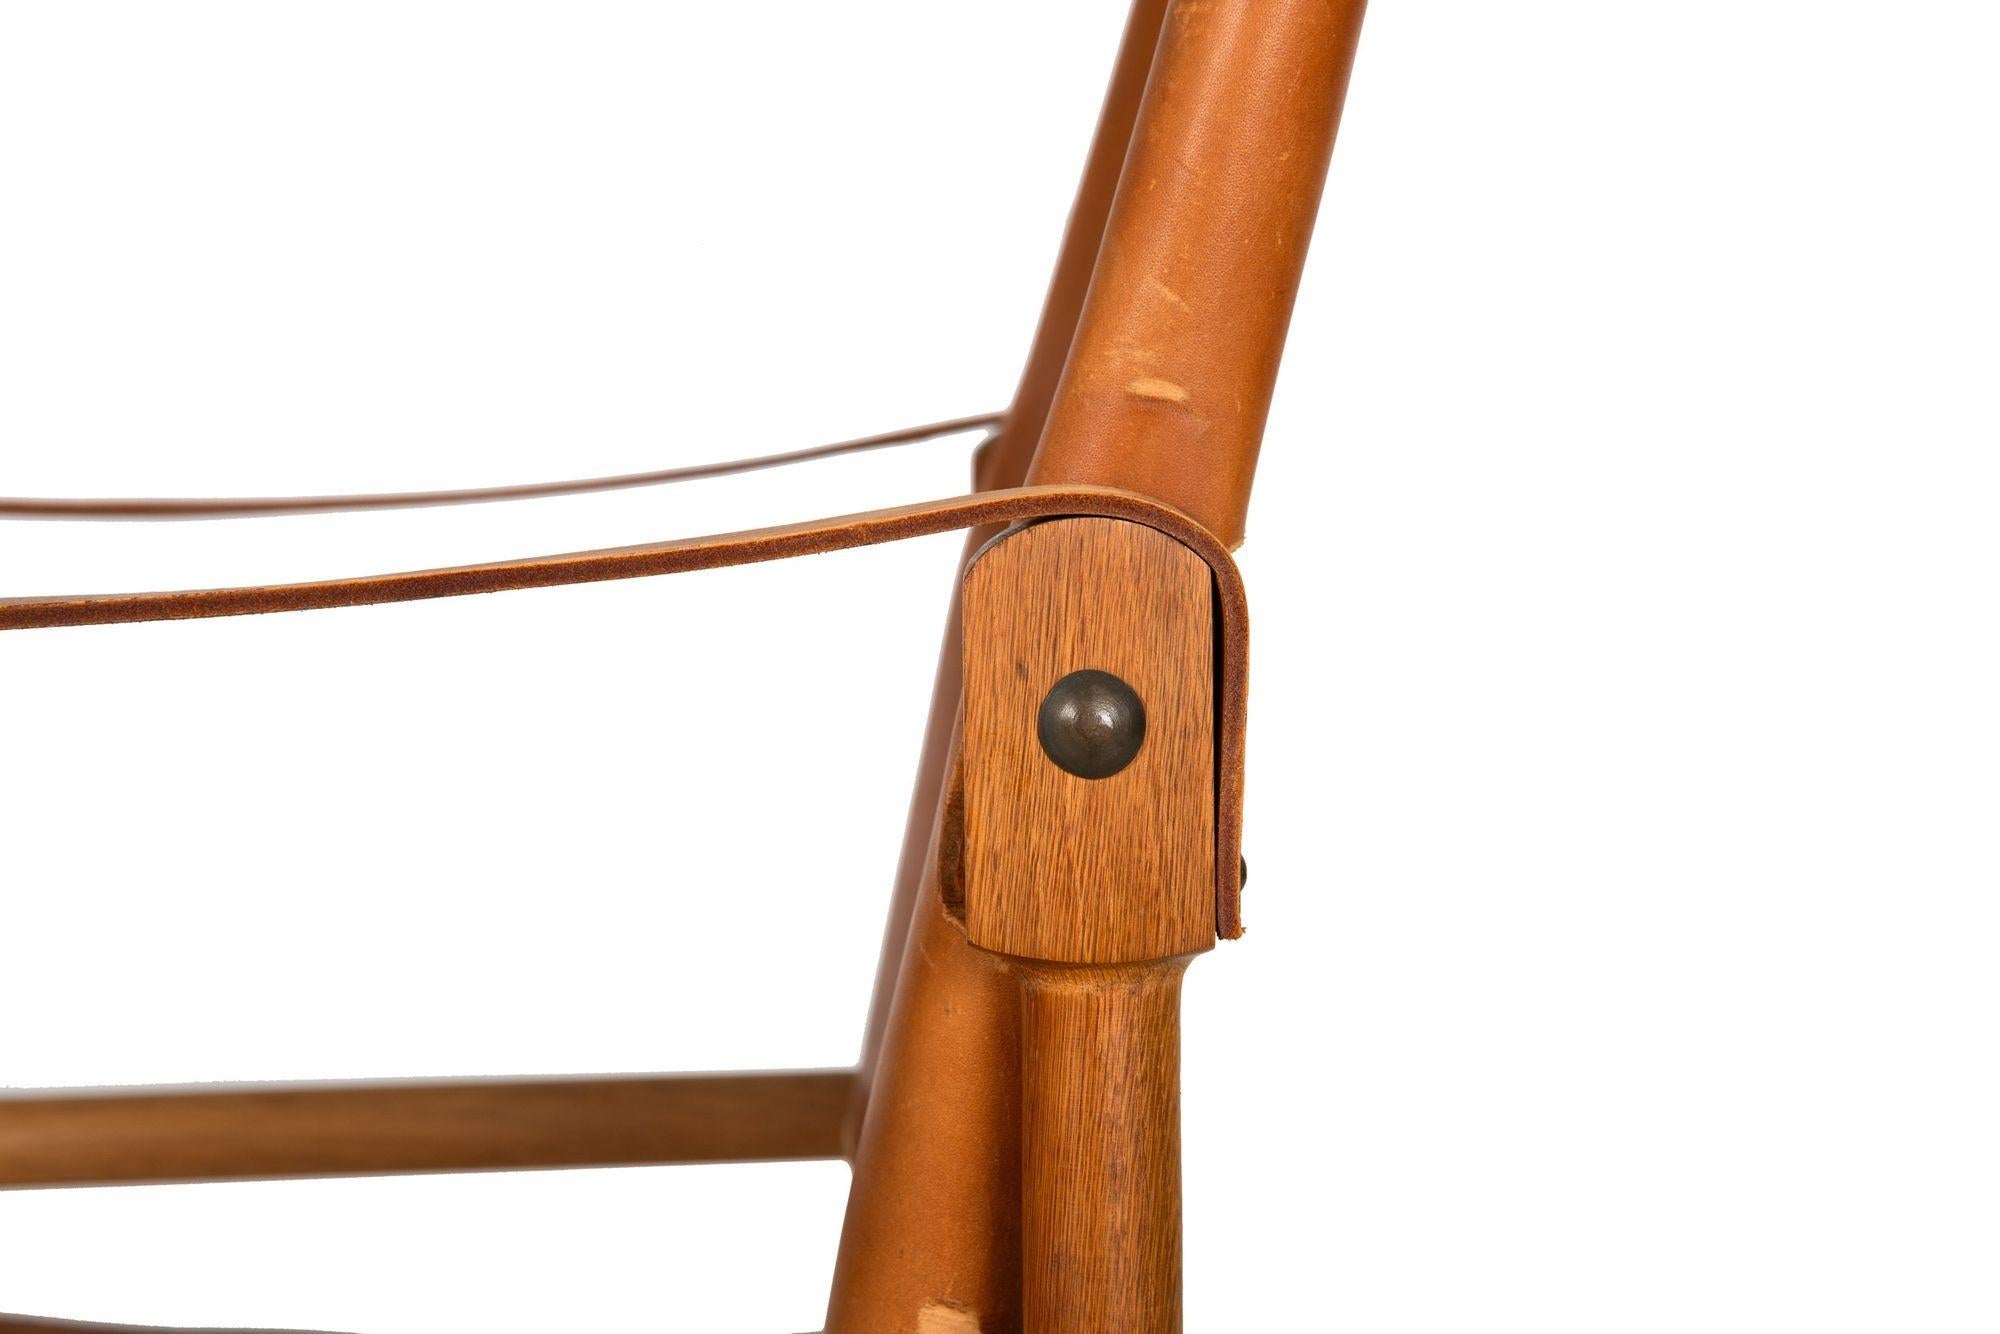 Vintage Circa 1950s Leather and Oak “Safari” Arm Chair by Wilhelm Kienzle For Sale 9